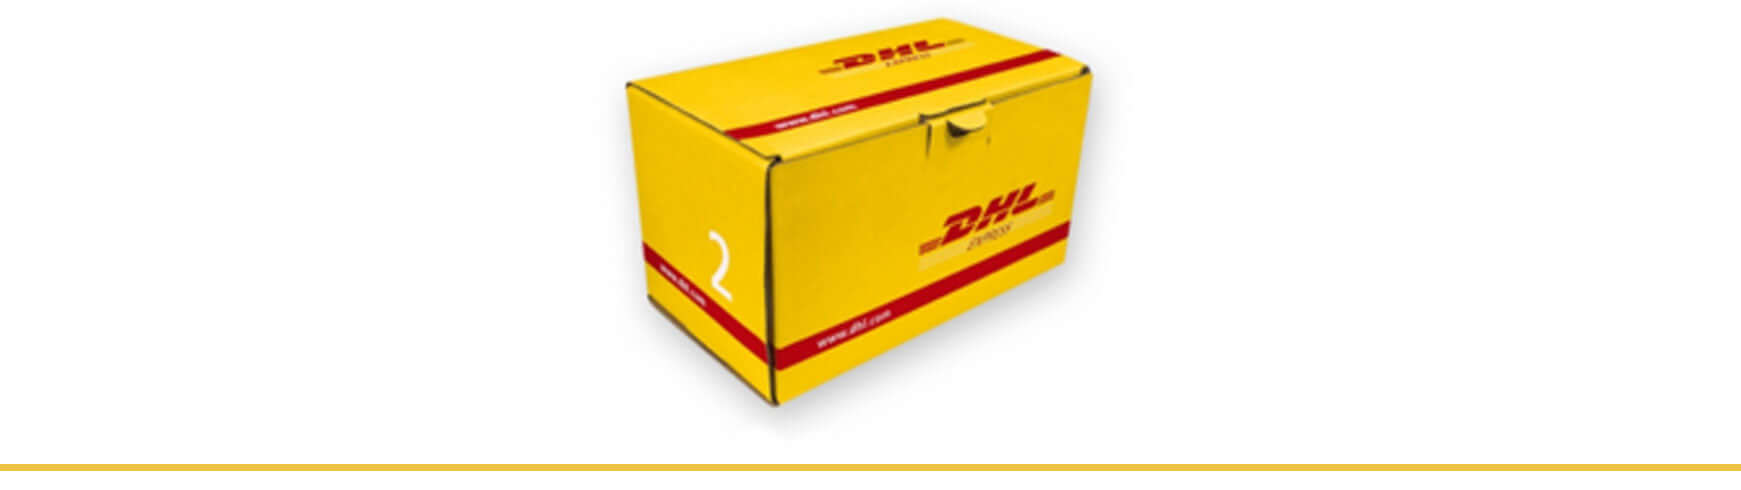 Emisil shipping box